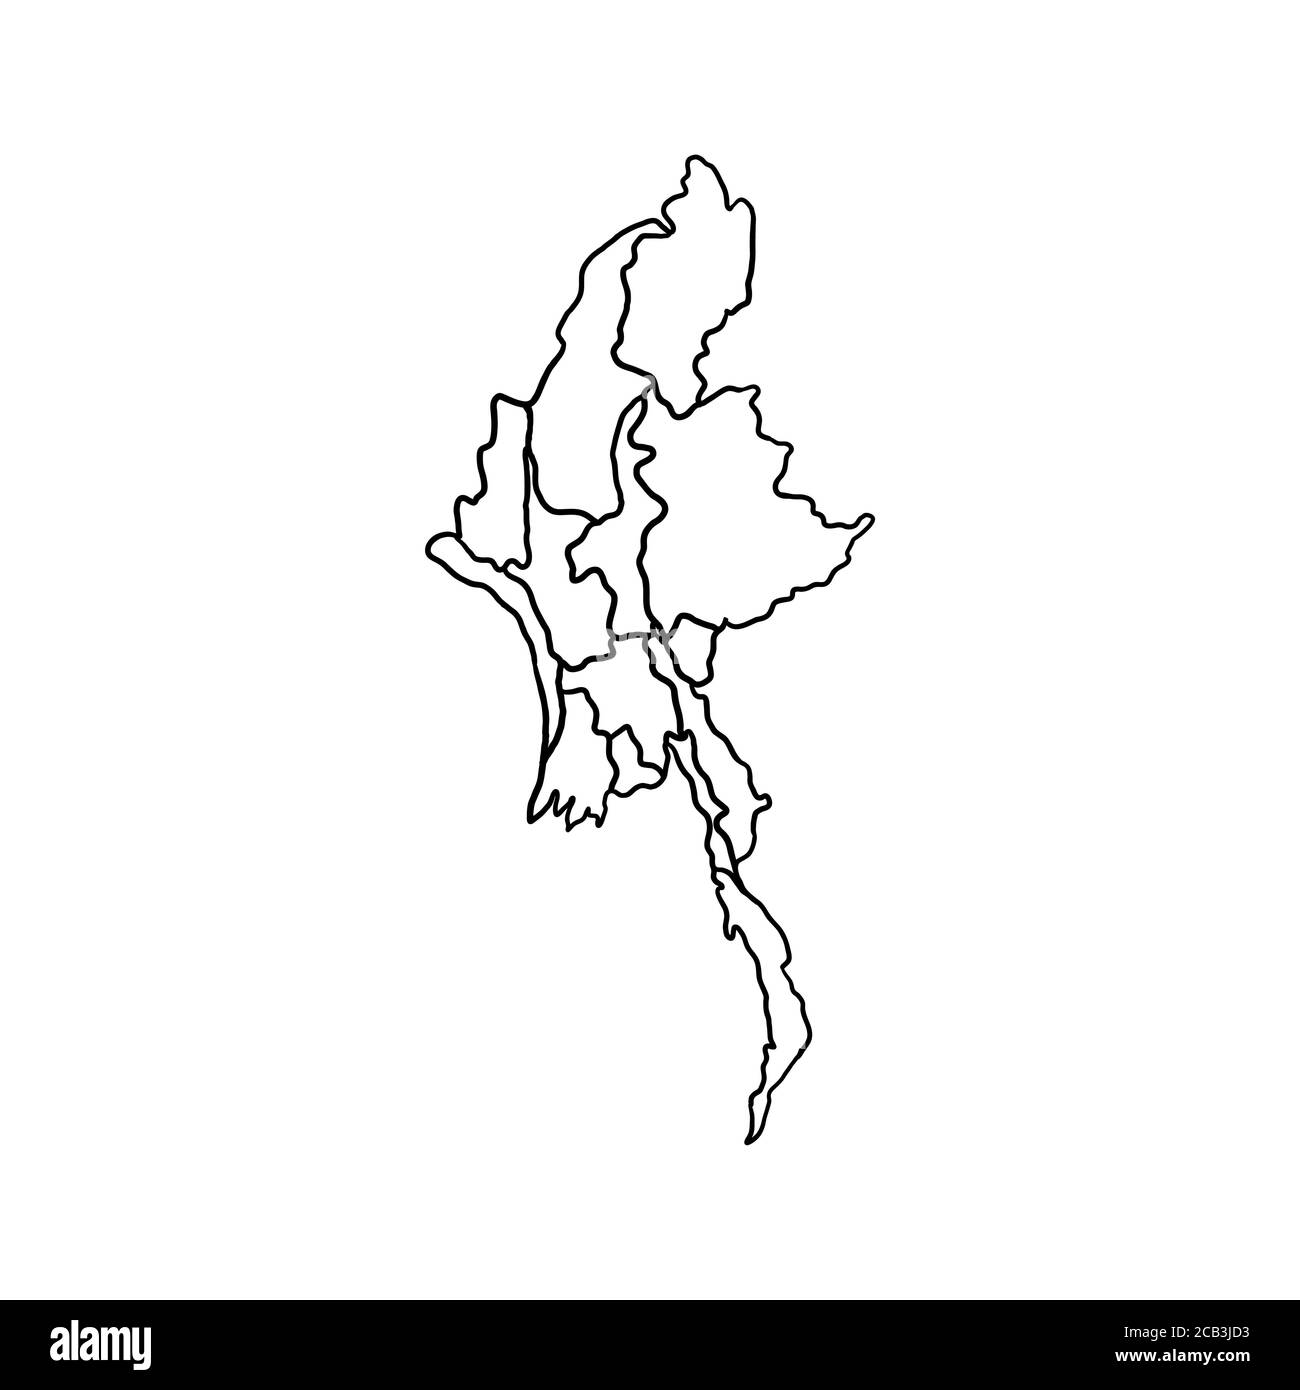 Myanmar map vector design template illustration Stock Vector